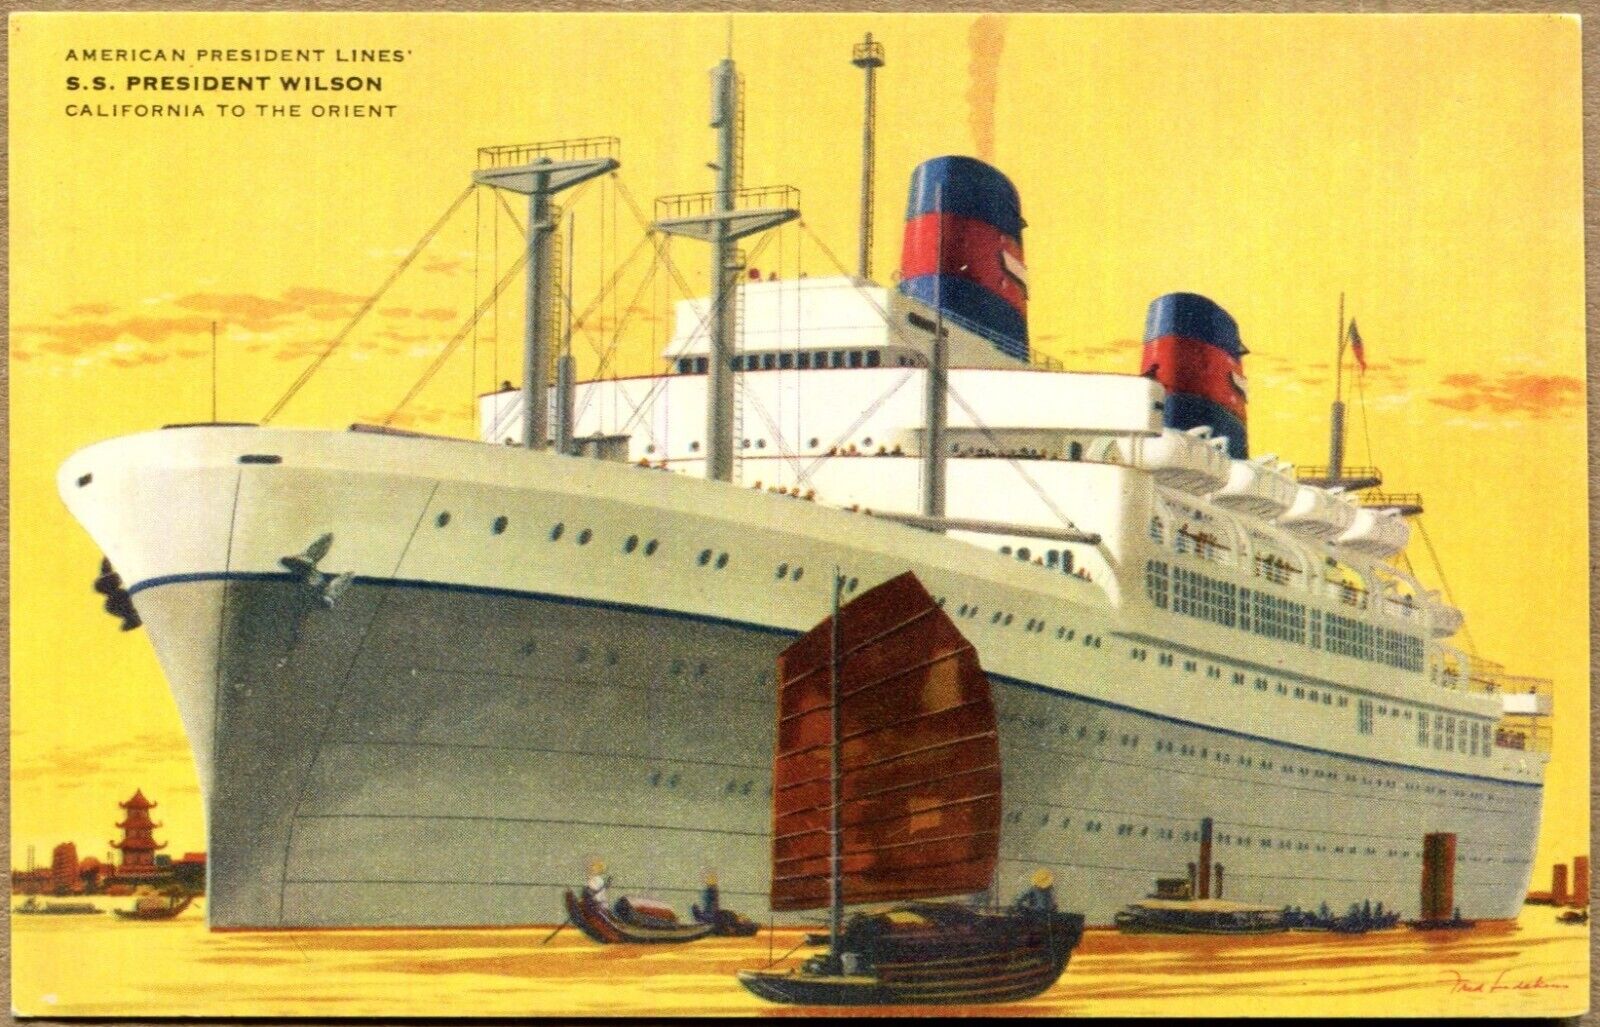 Vintage American Presidents Line Post Card SS President Wilson luxury liner 